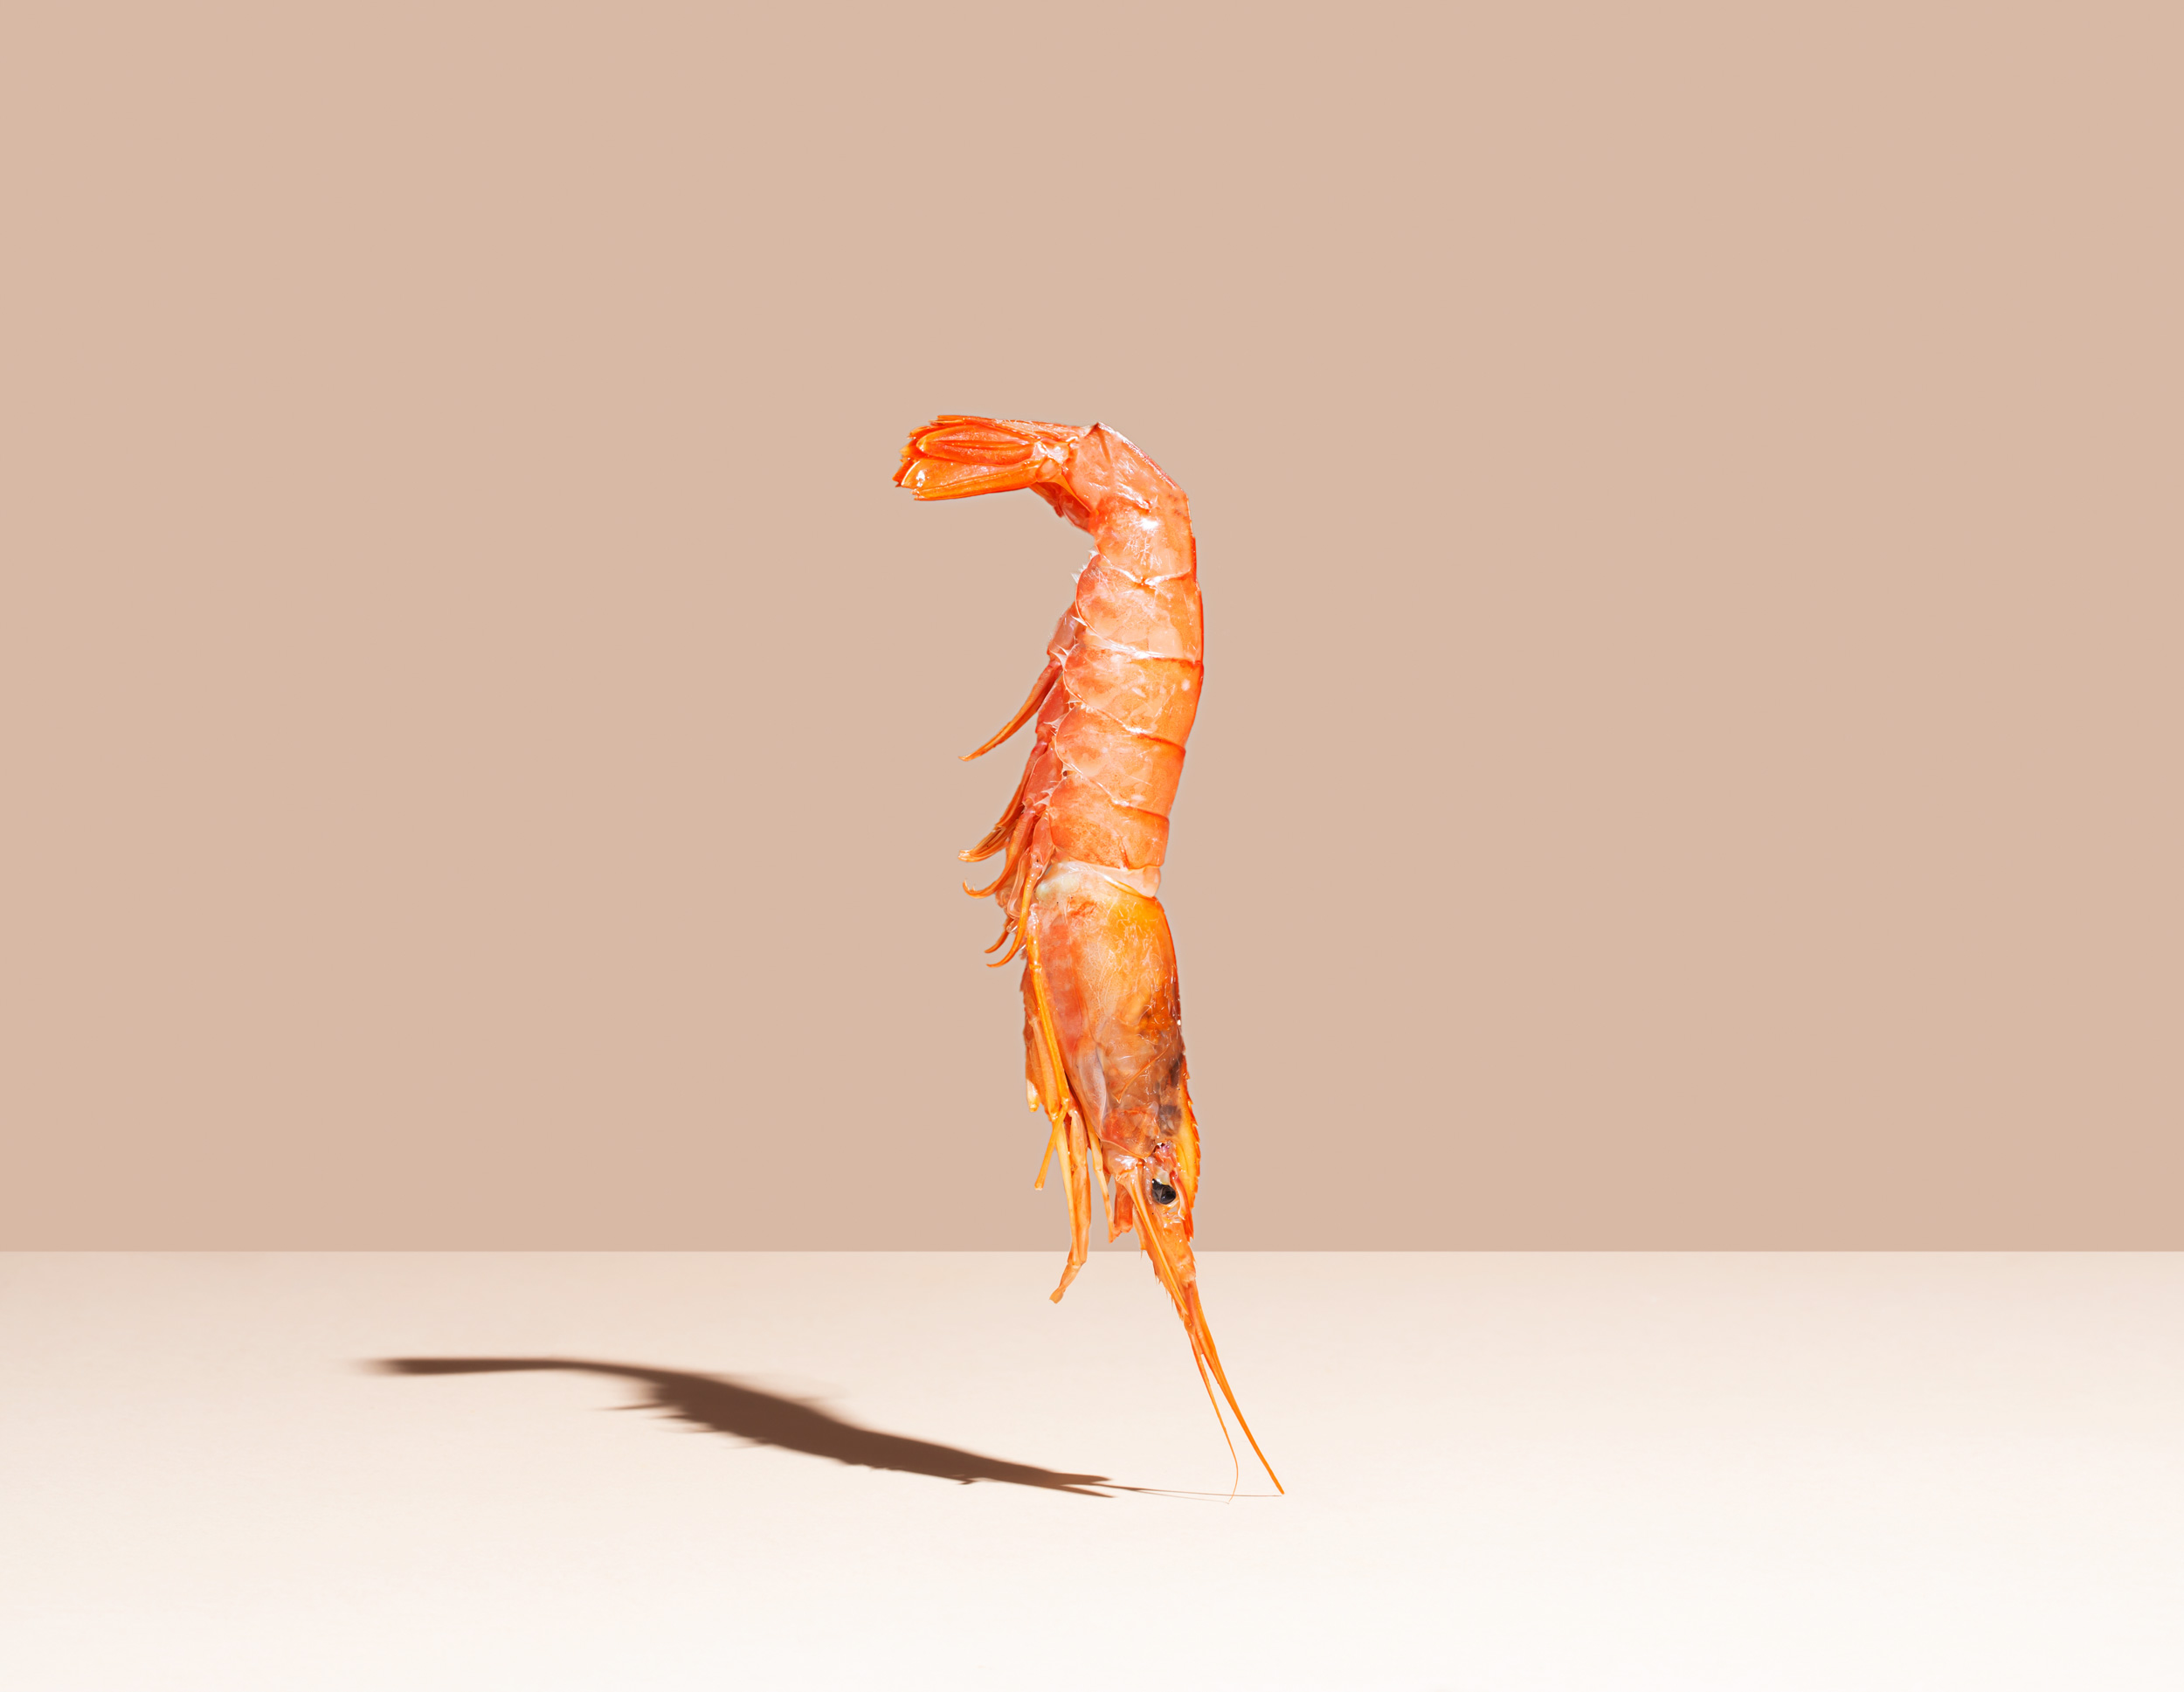 red-shrimp-on-beige-background-minimalistic-conce-2021-08-30-00-04-41-utc